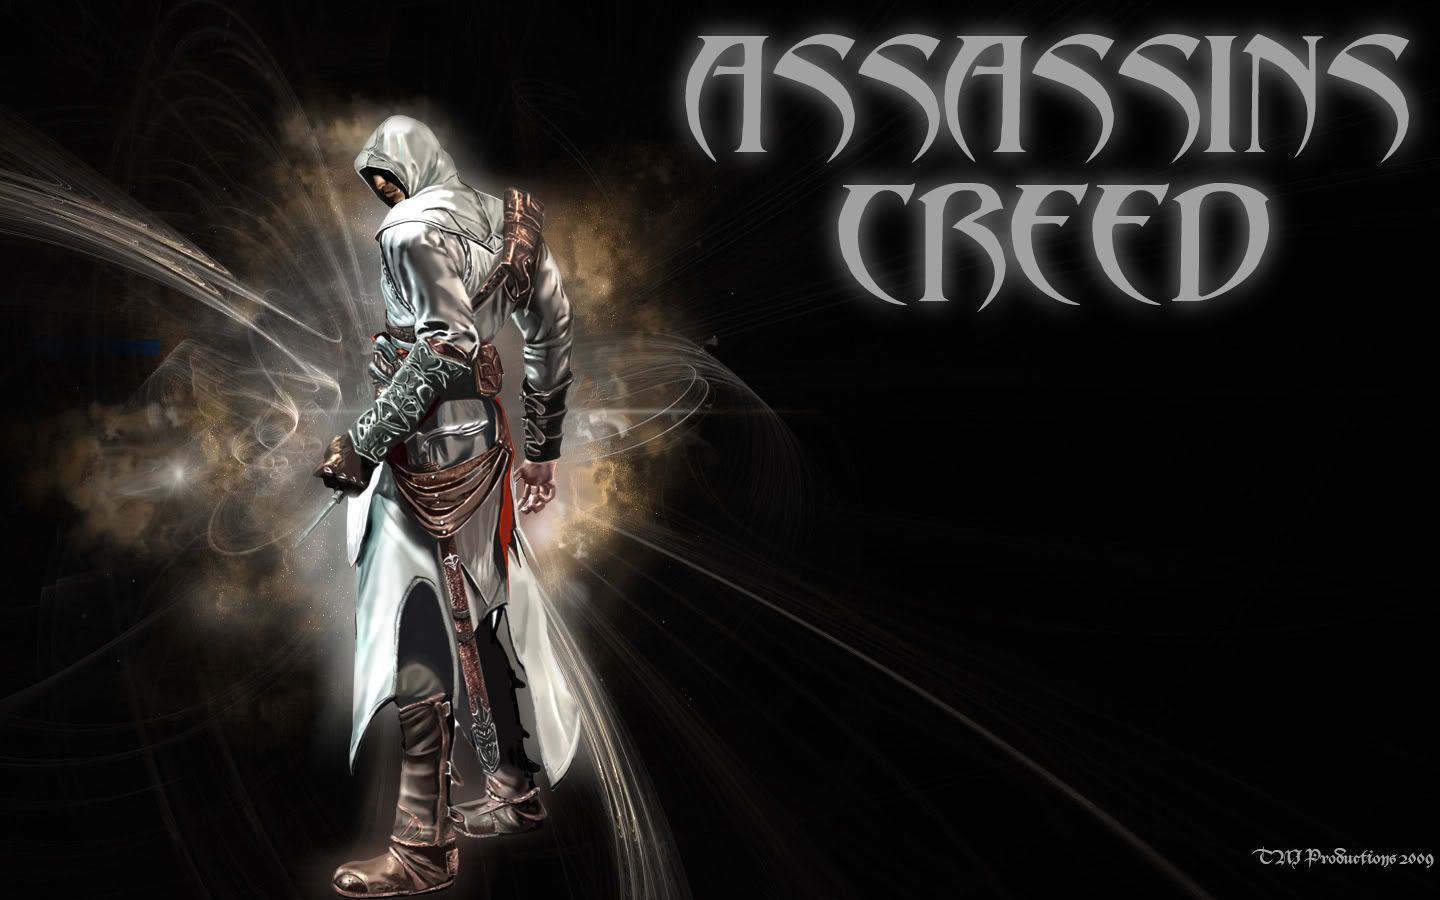 Assassin's Creed - The Assassin's Wallpaper (32054301) - Fanpop